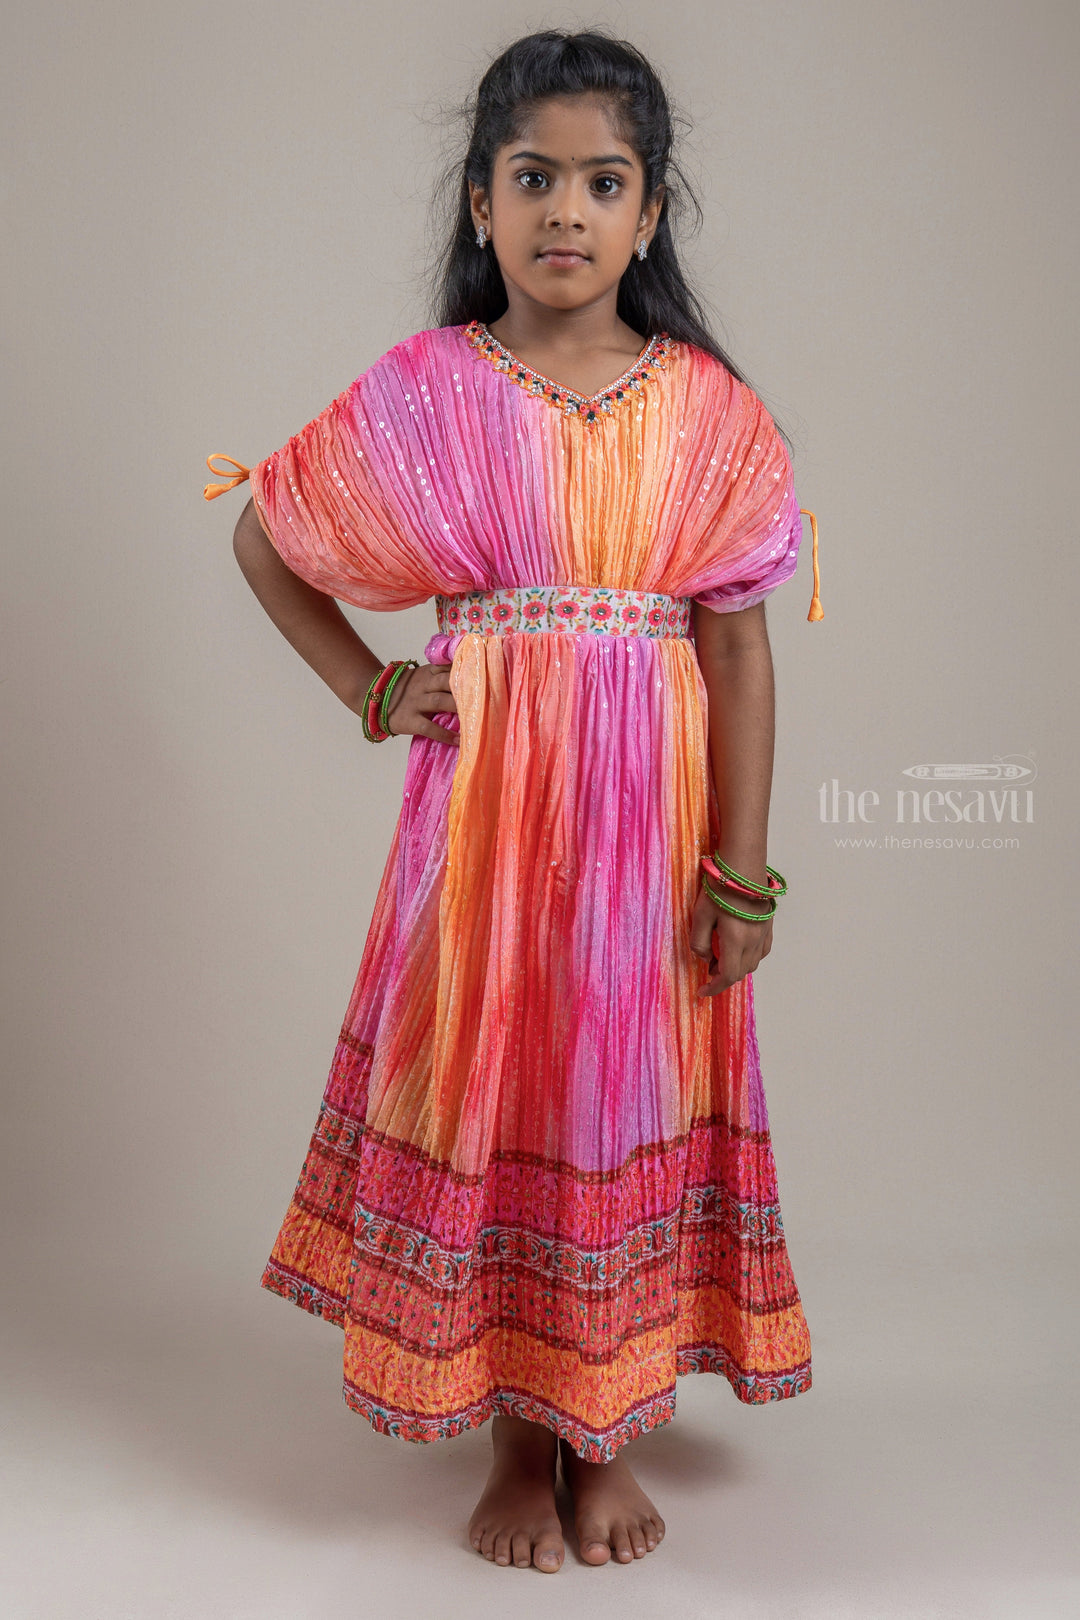 The Nesavu Kids Anarkali Dazzling Multi-colored Floral printed V-Neck Anarkali Dress For Girls psr silks Nesavu 16 (1Y) / multicolor GA135